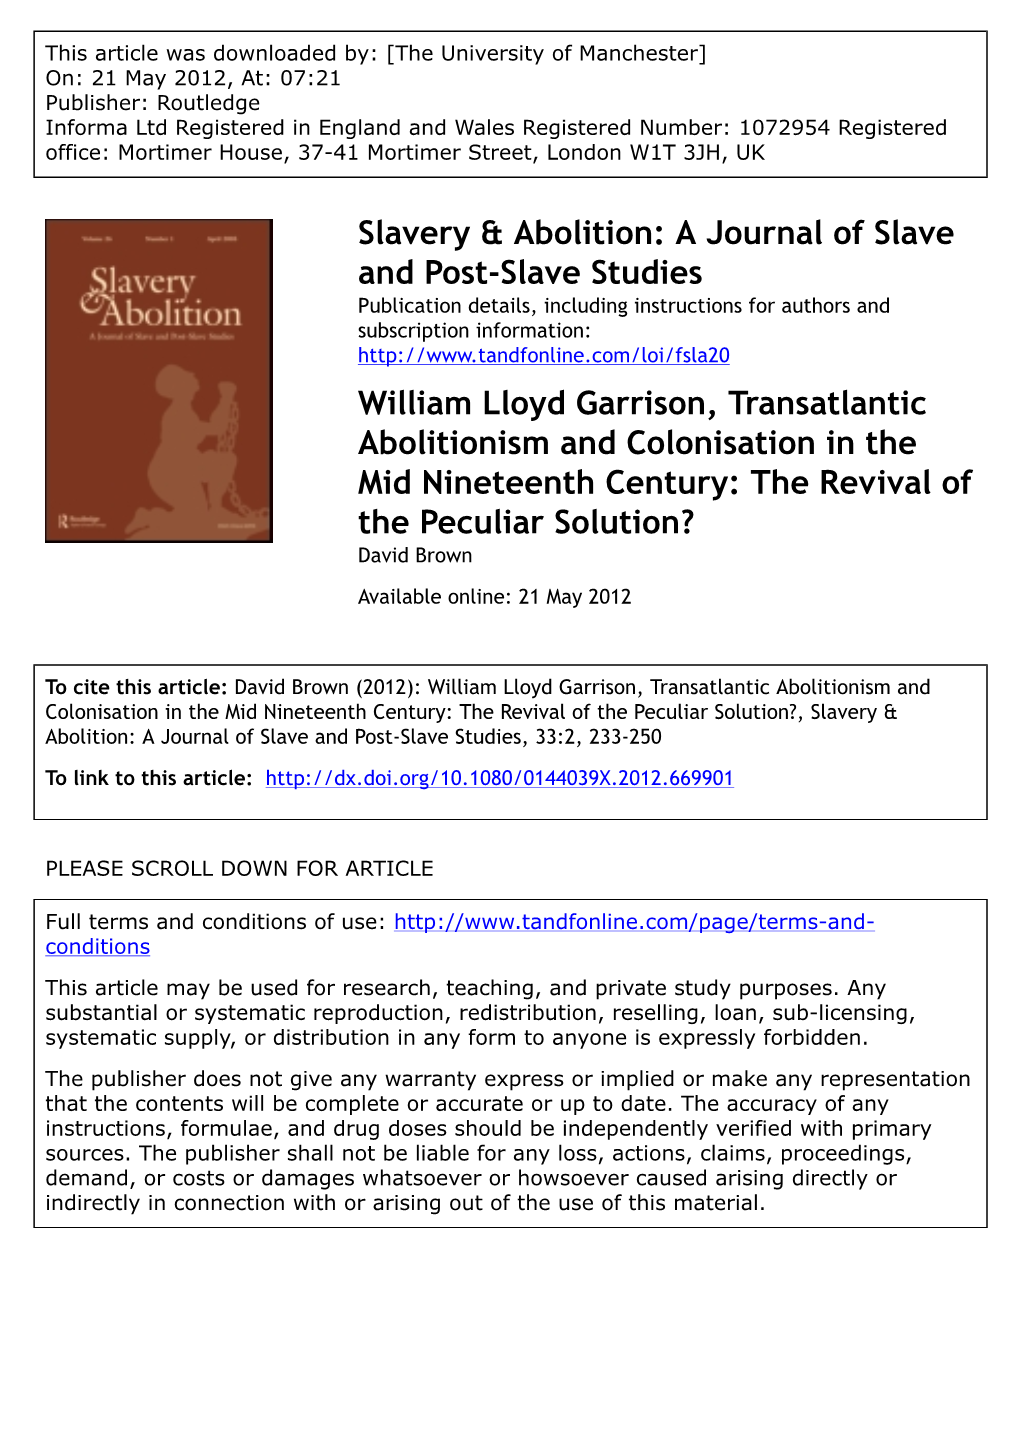 William Lloyd Garrison, Transatlantic Abolitionism and Colonisation in the Mid Nineteenth Century